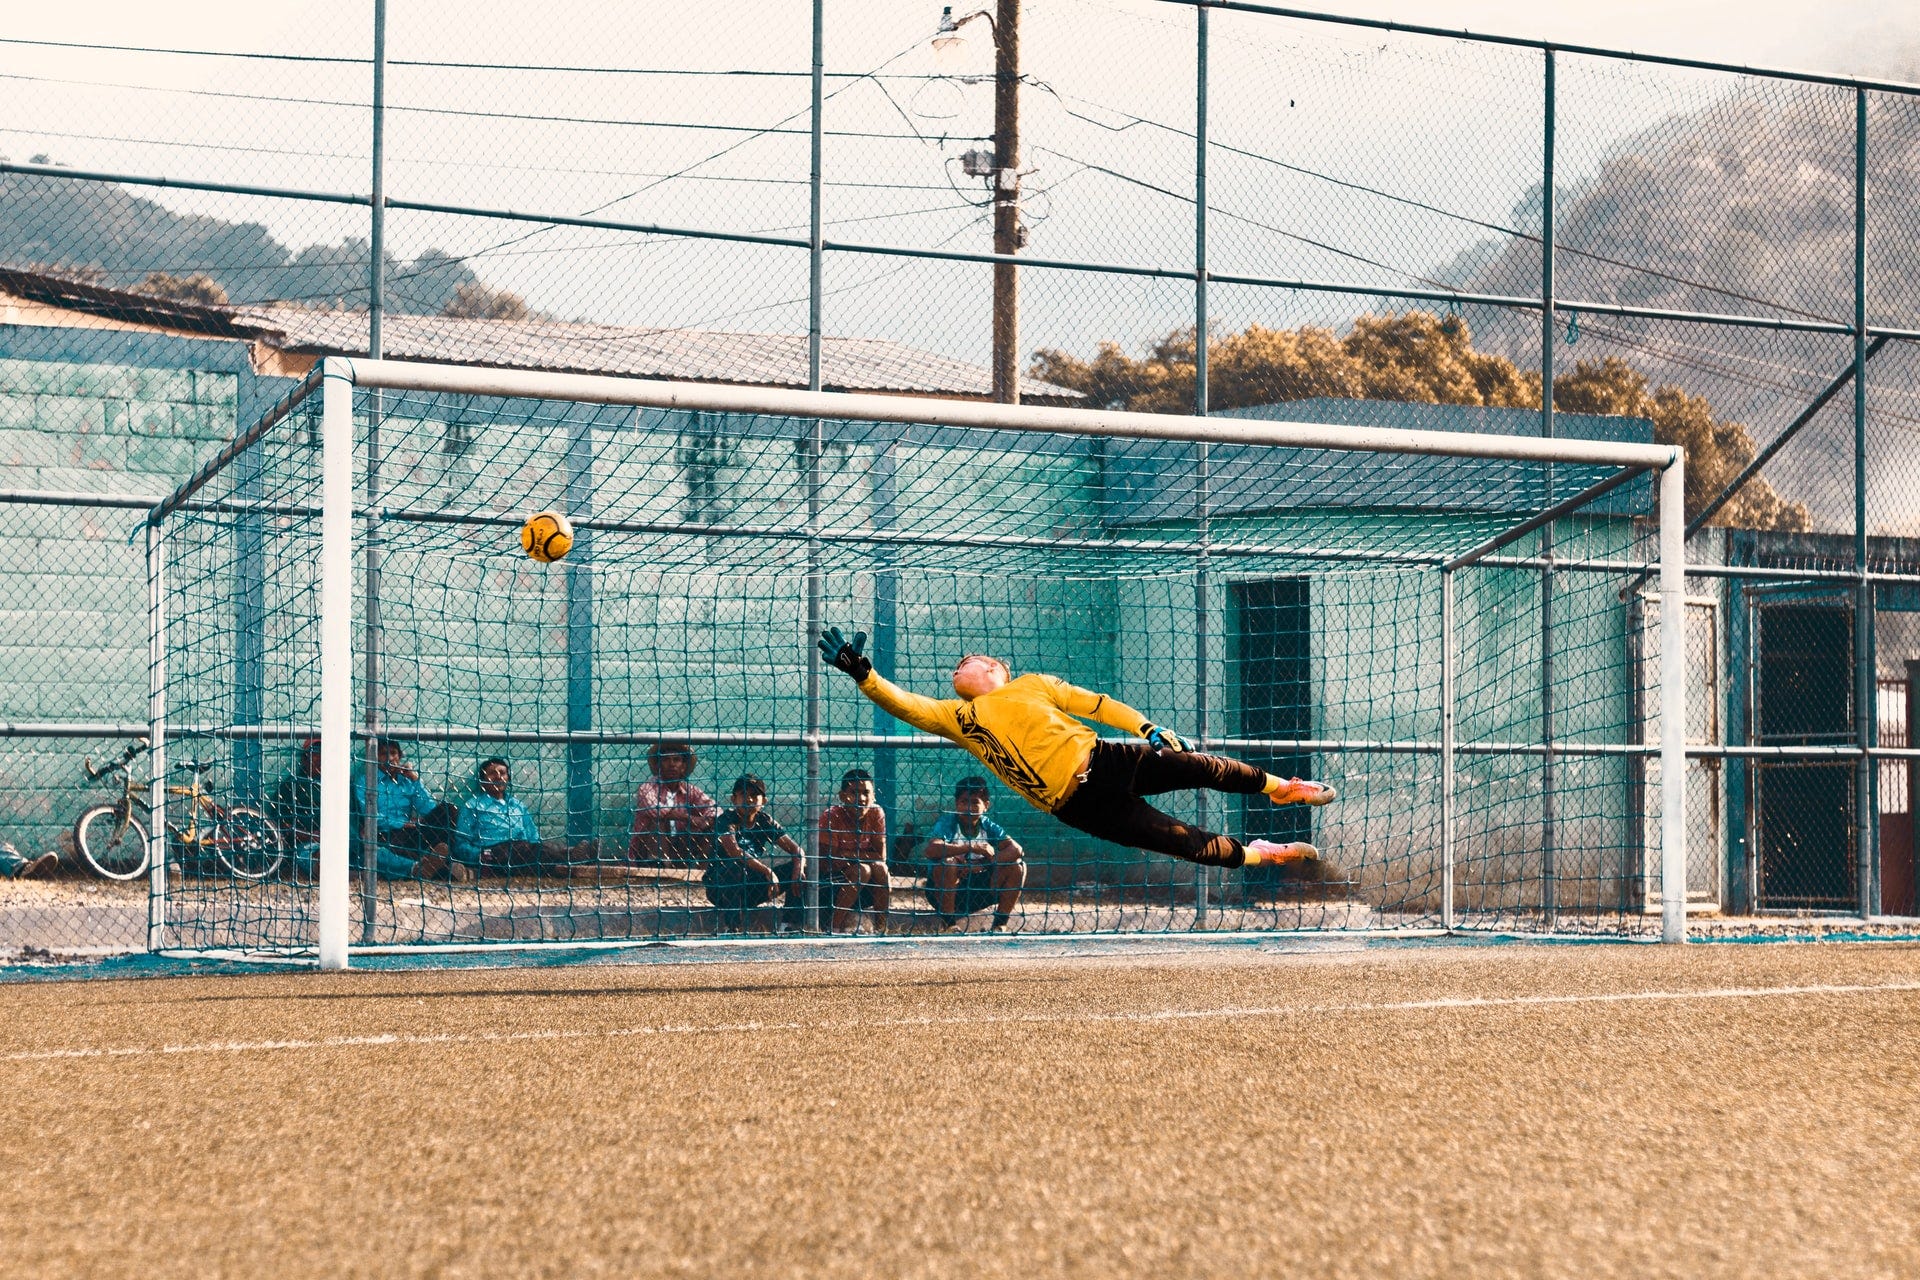 Identifying Goalkeepers’ Build-Up Style Using Machine Learning